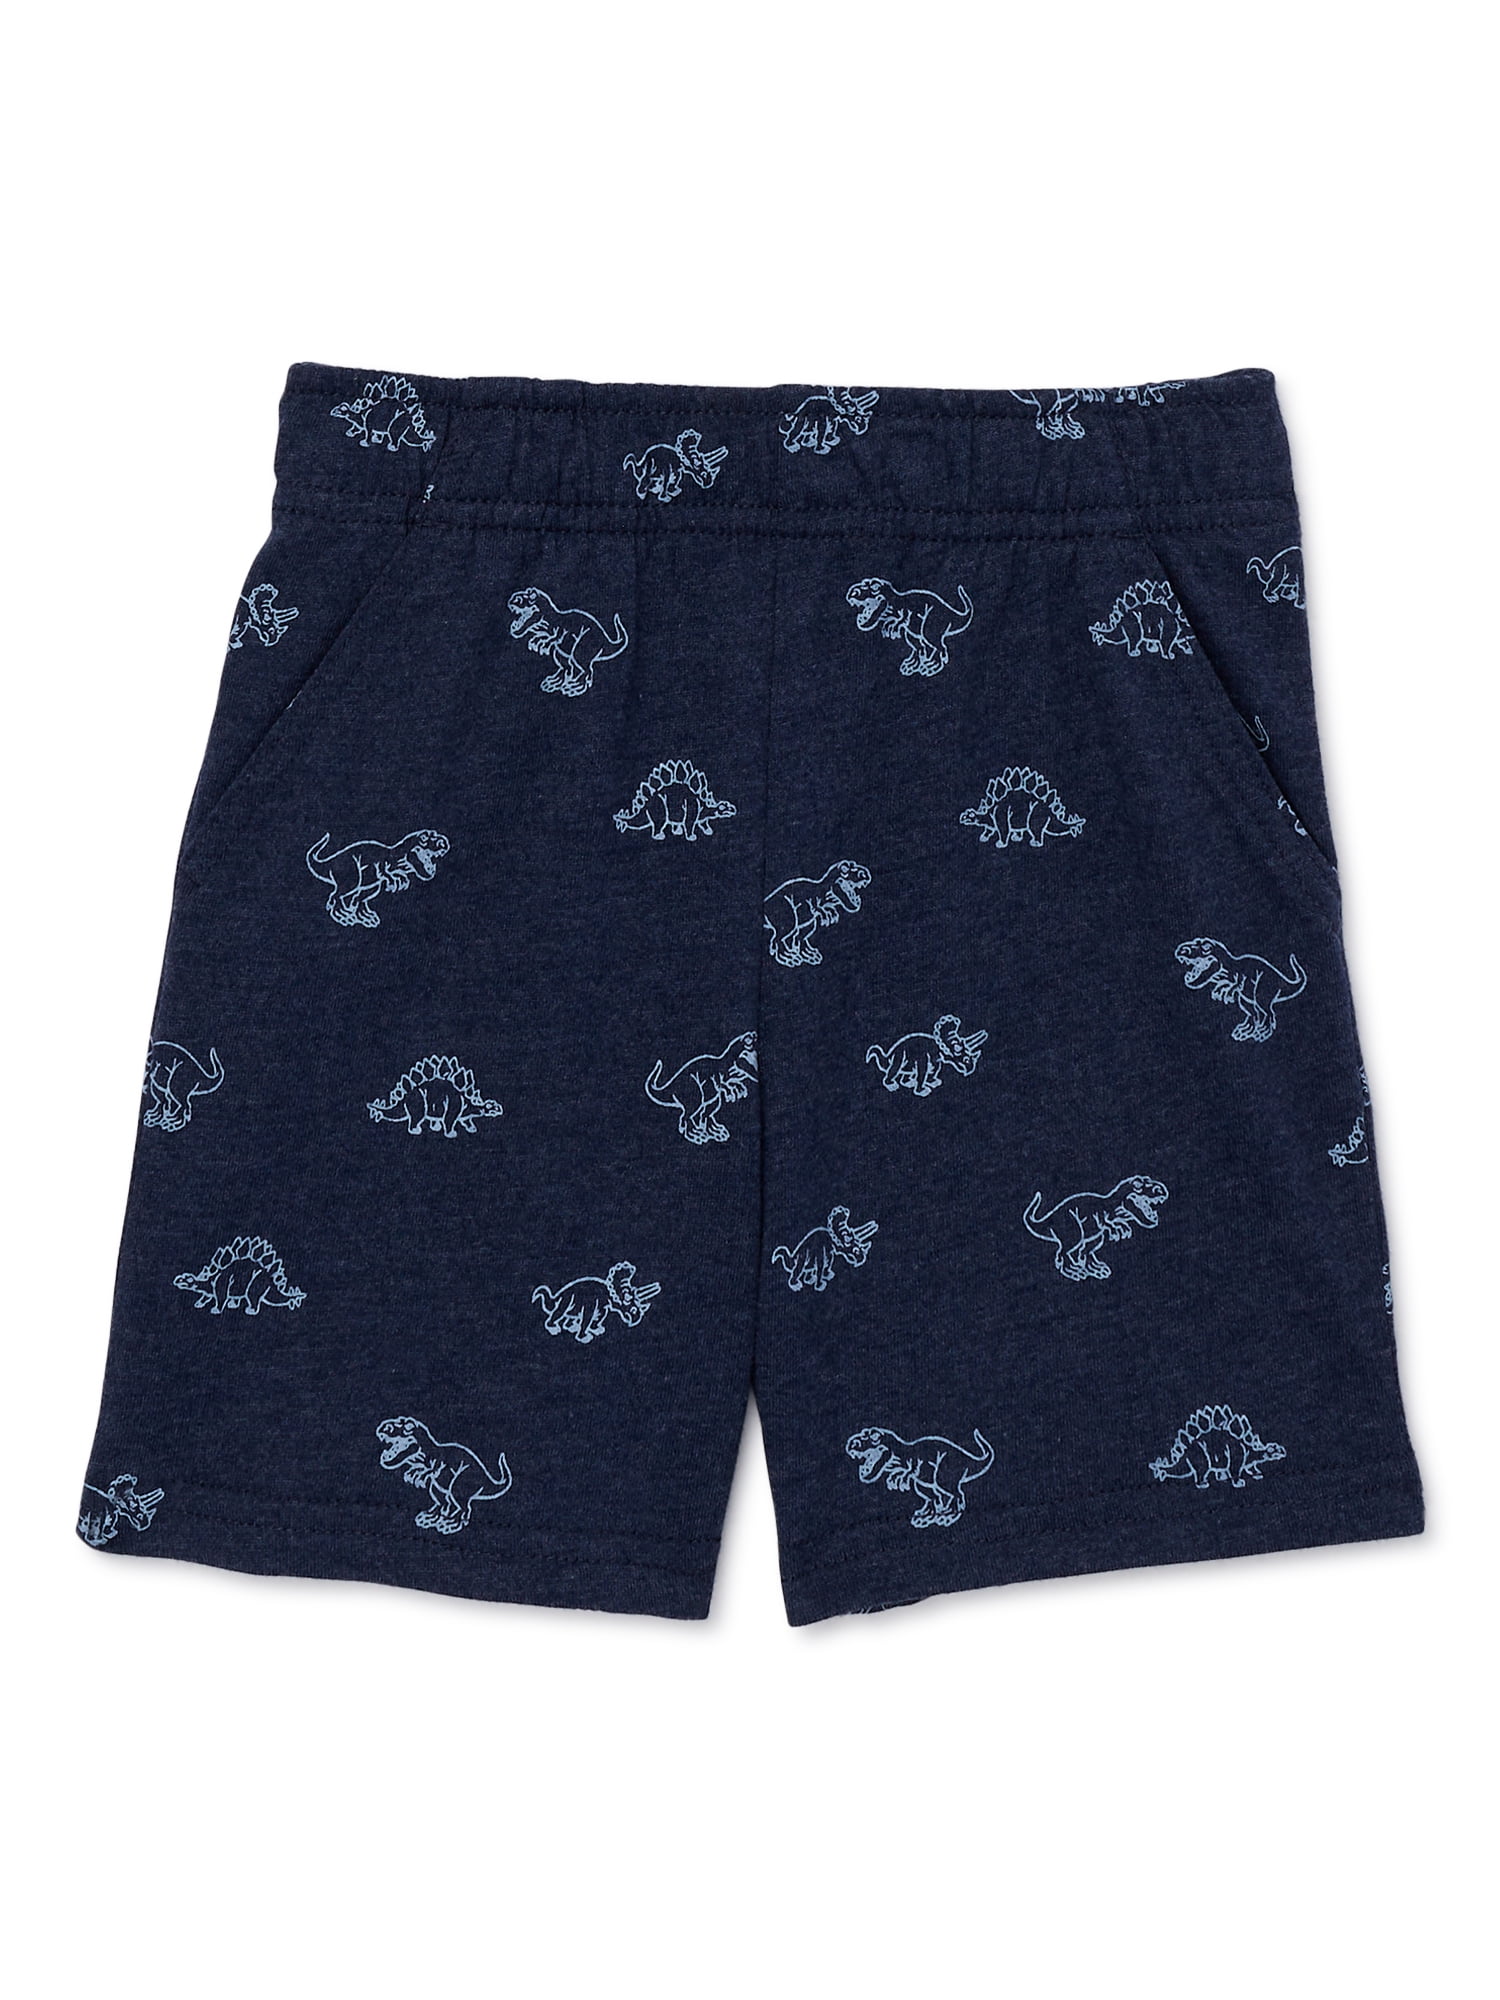 Garanimals Toddler Boy Print Jersey Shorts with Pockets, Sizes 18M-5T ...